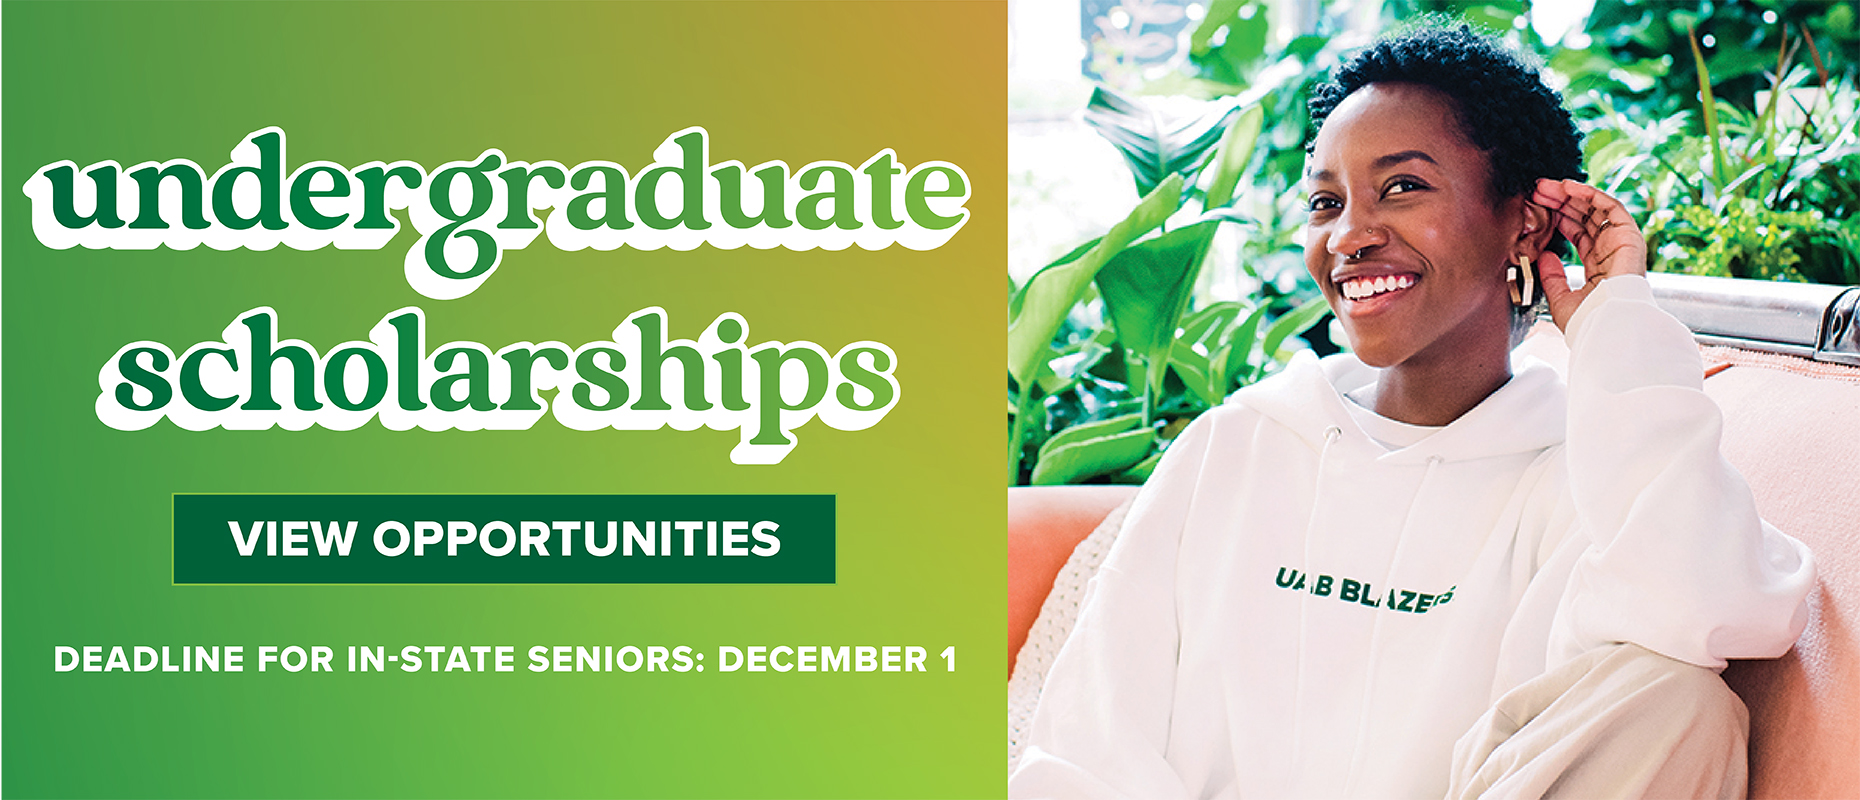 Undergraduate scholarships. View opportunities. Deadline for in-state seniors: December 1.